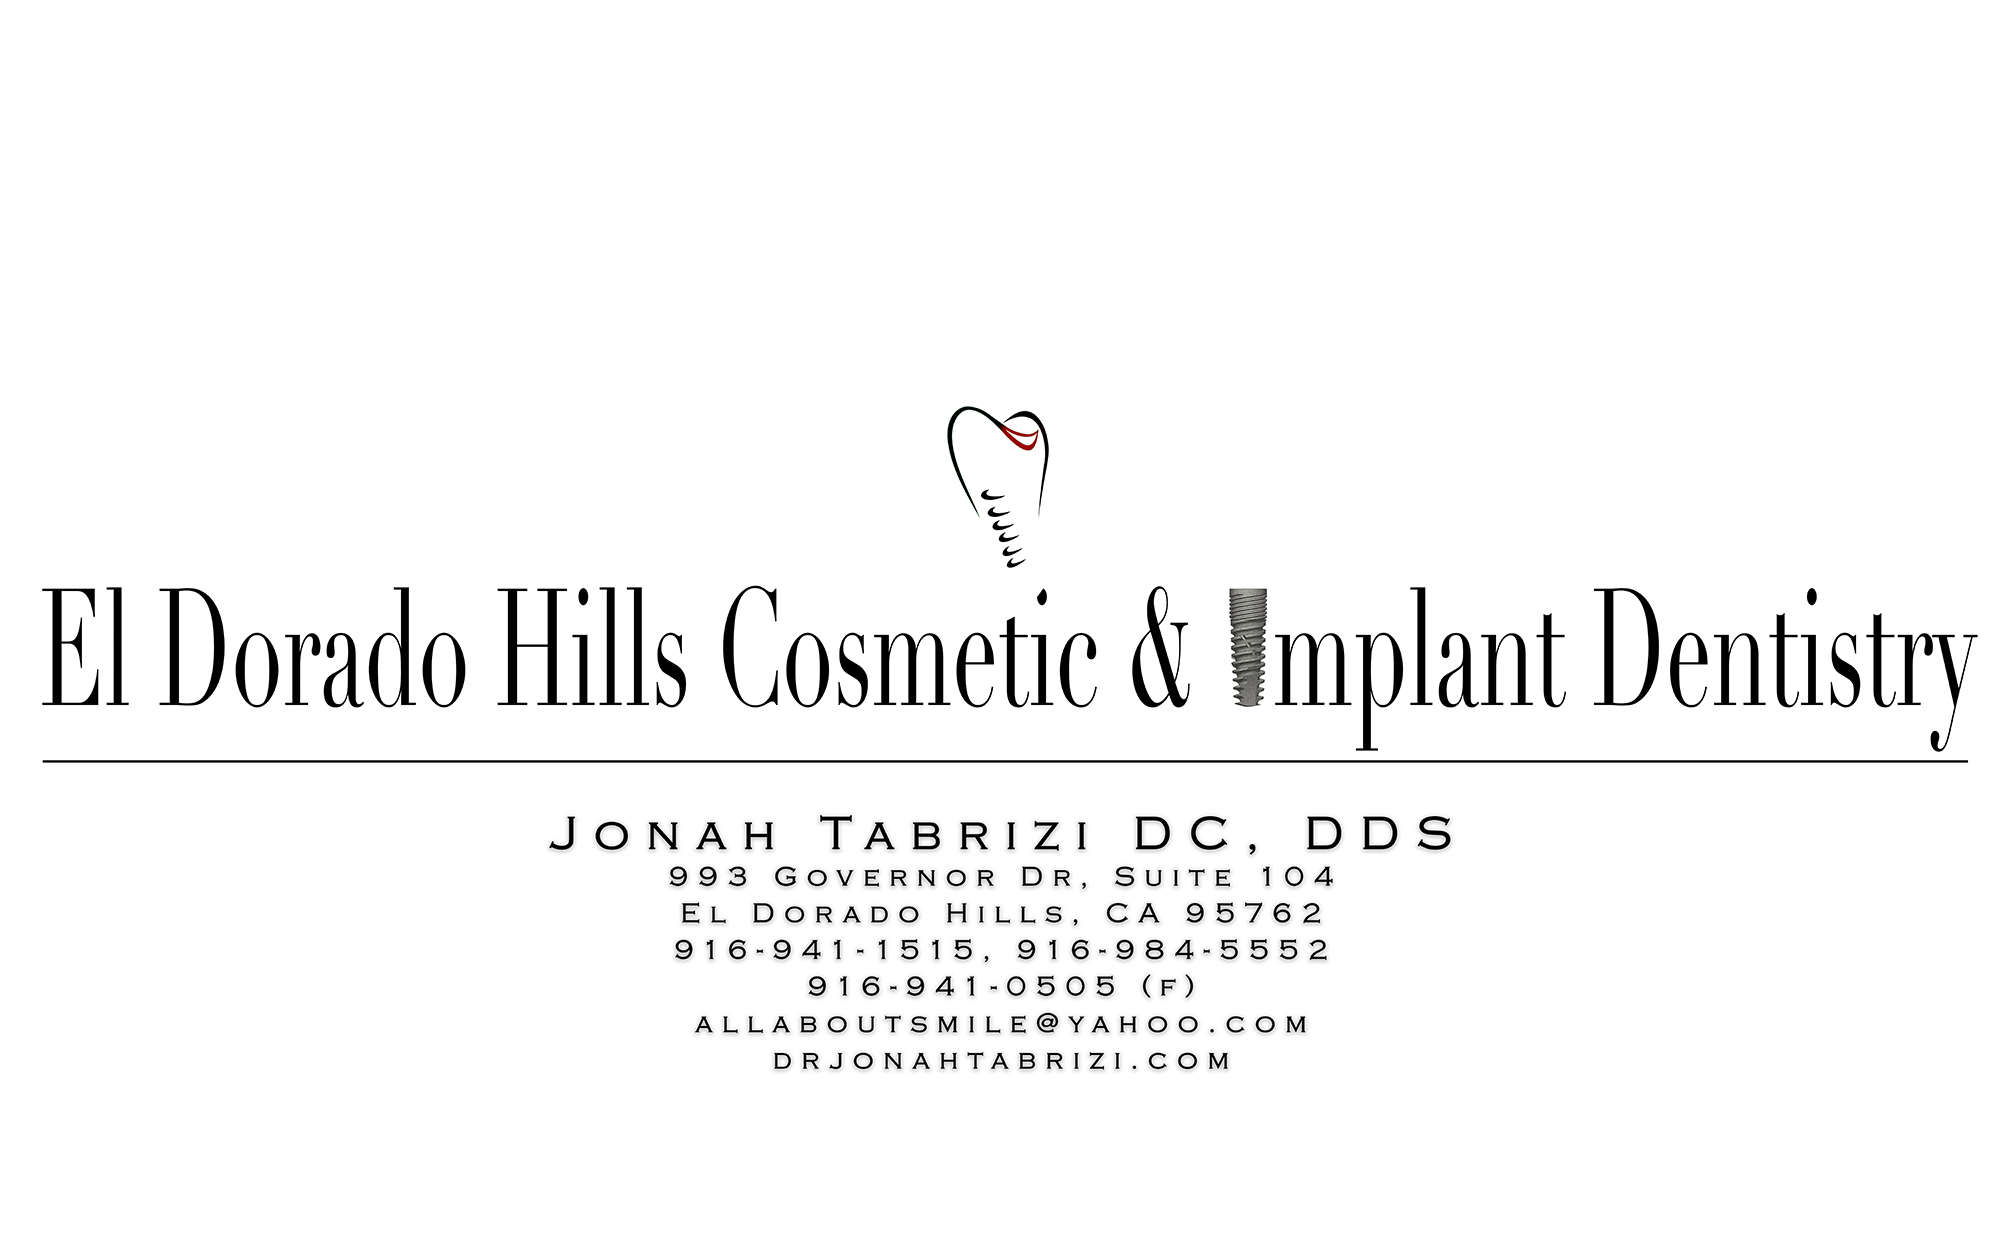 El Dorado Hills Cosmetic, Implant & Family Dentistry Jonah Tabrizi DC DDS Logo